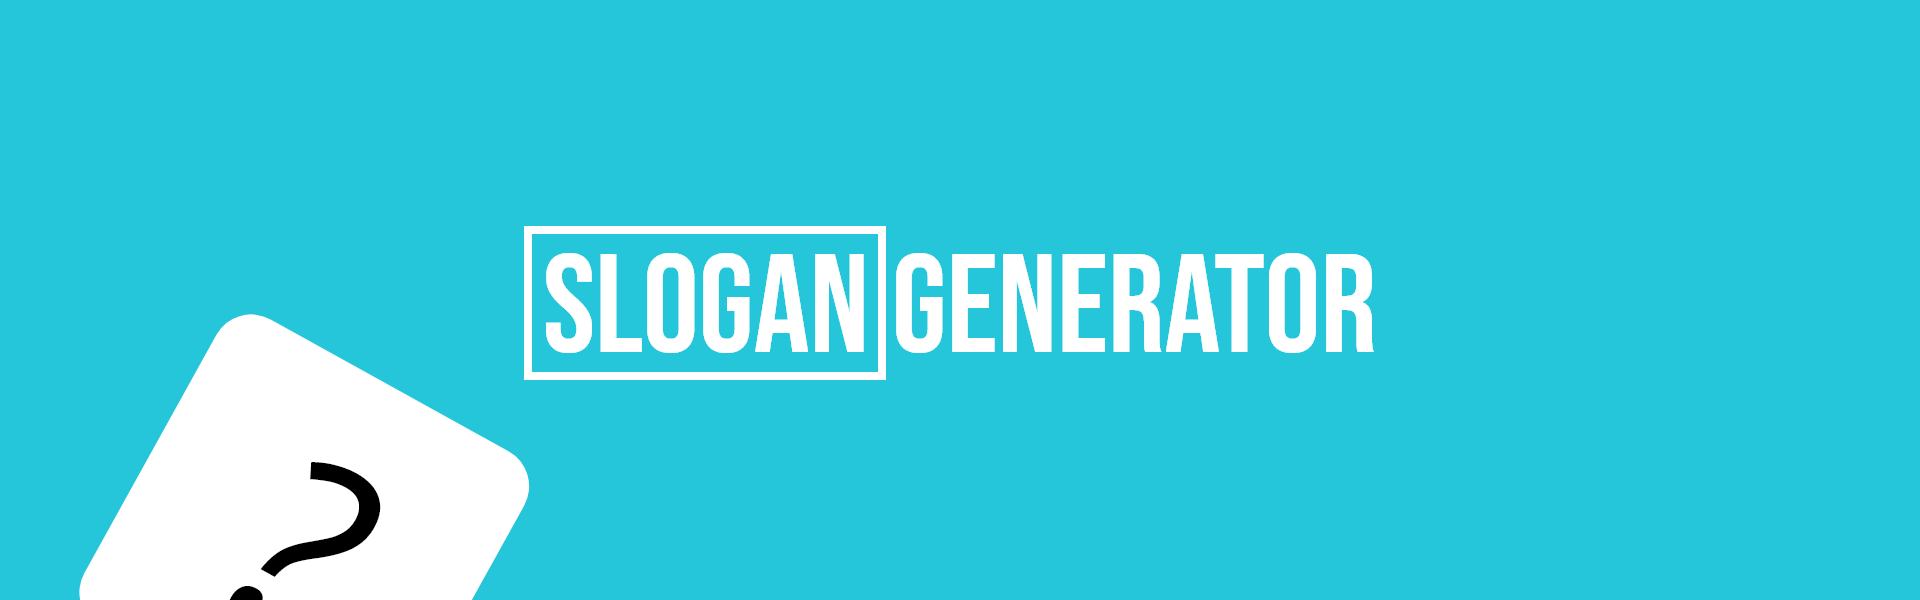 free slogan generator - free slogan maker